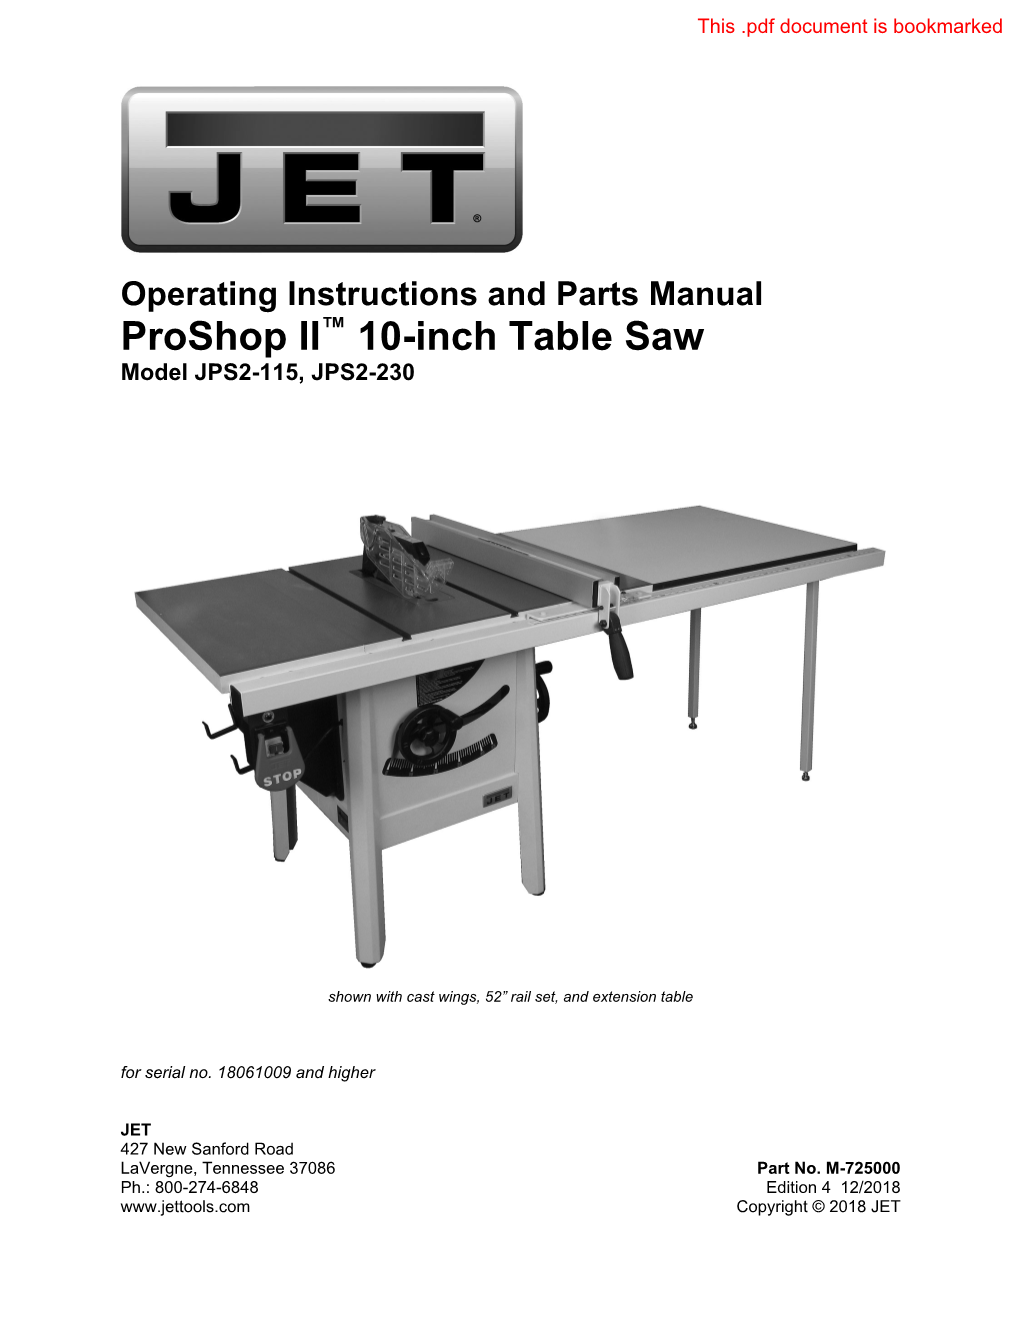 Proshop II™ 10-Inch Table Saw Model JPS2-115, JPS2-230